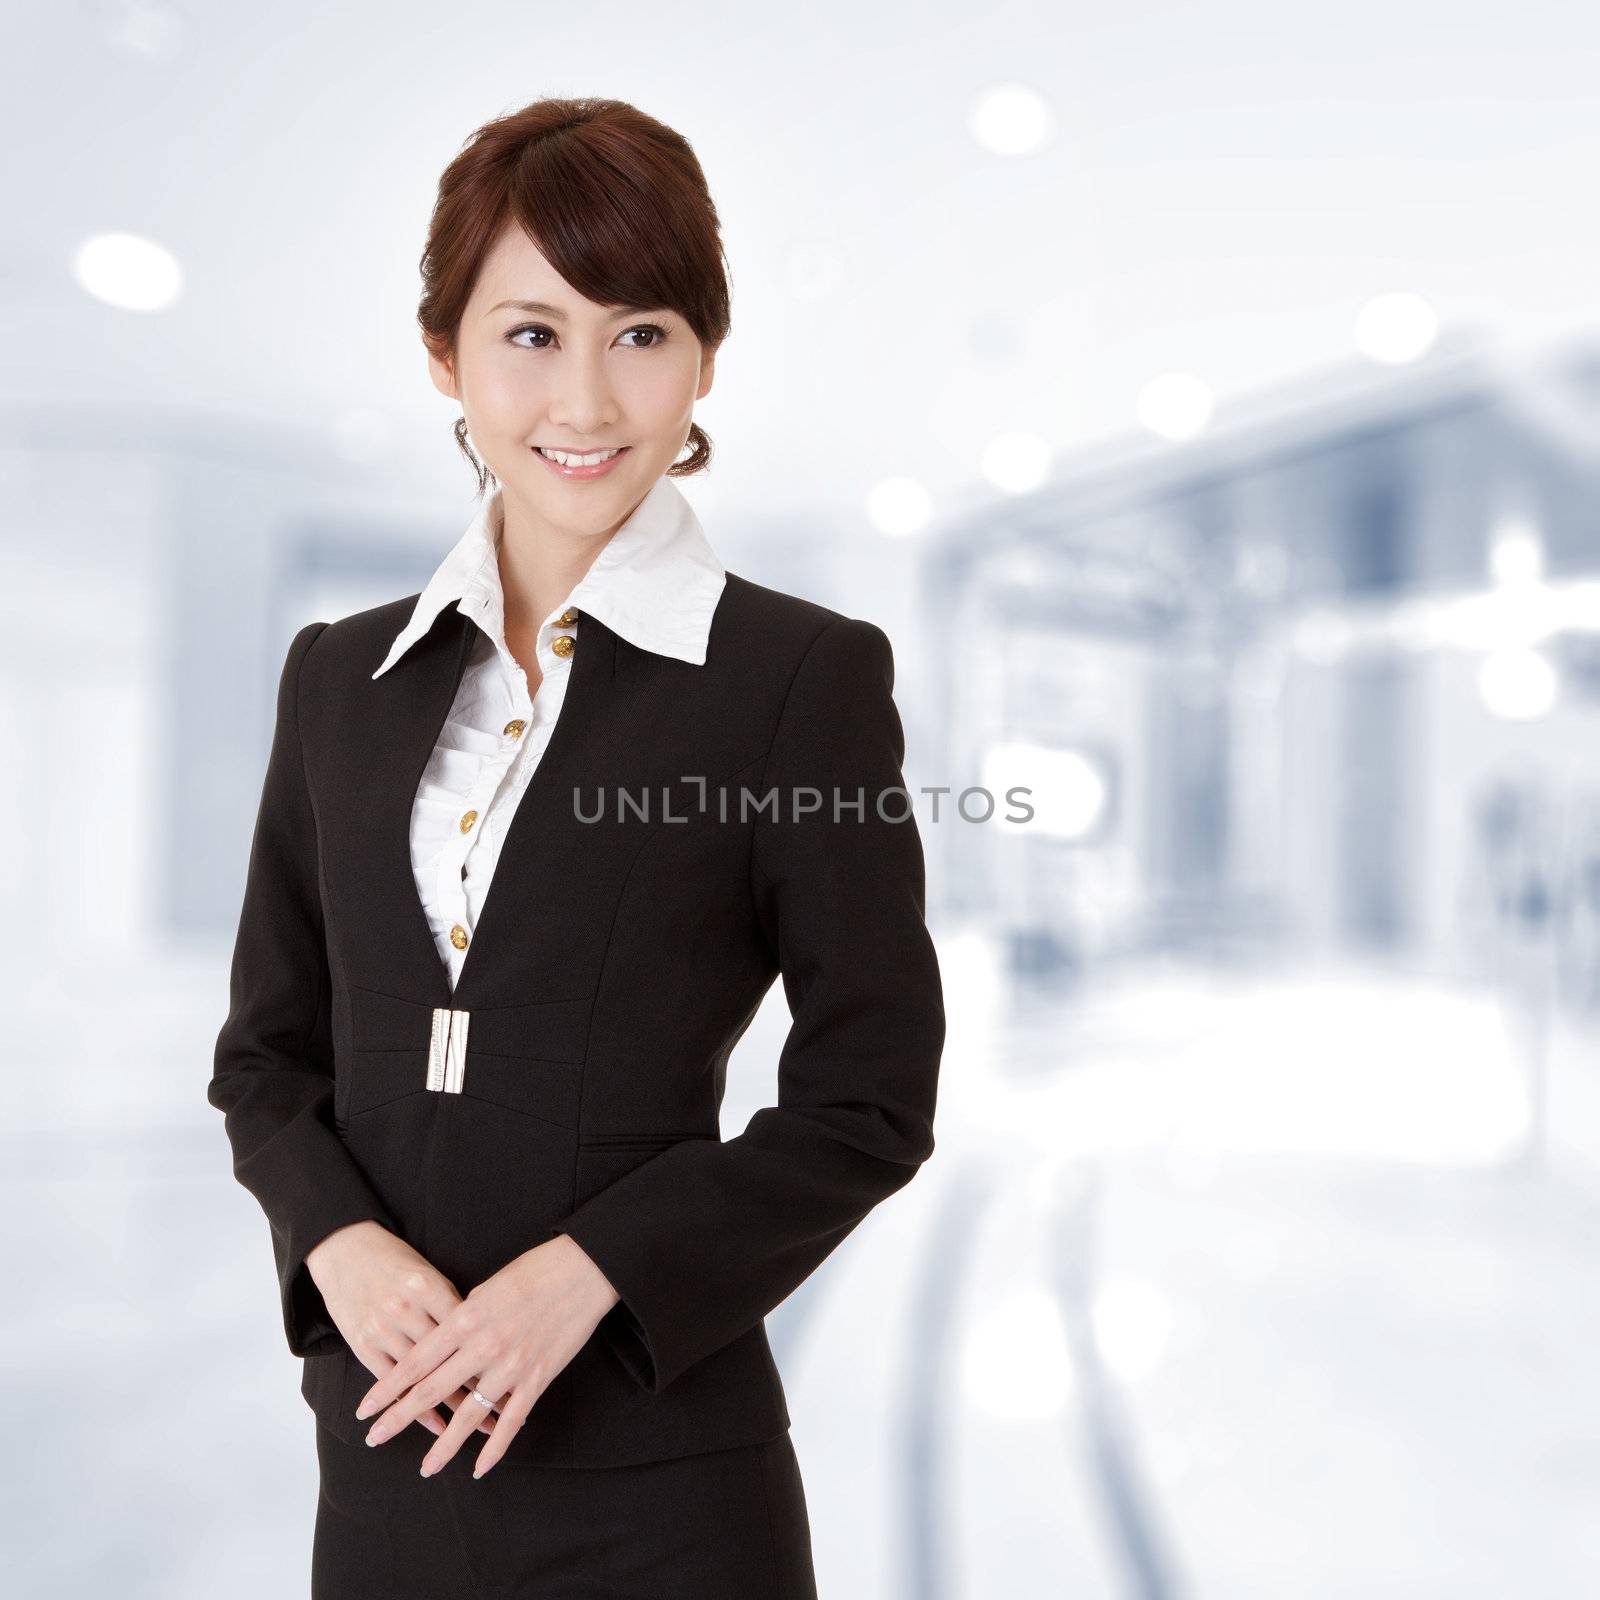 Successful young executive woman by elwynn